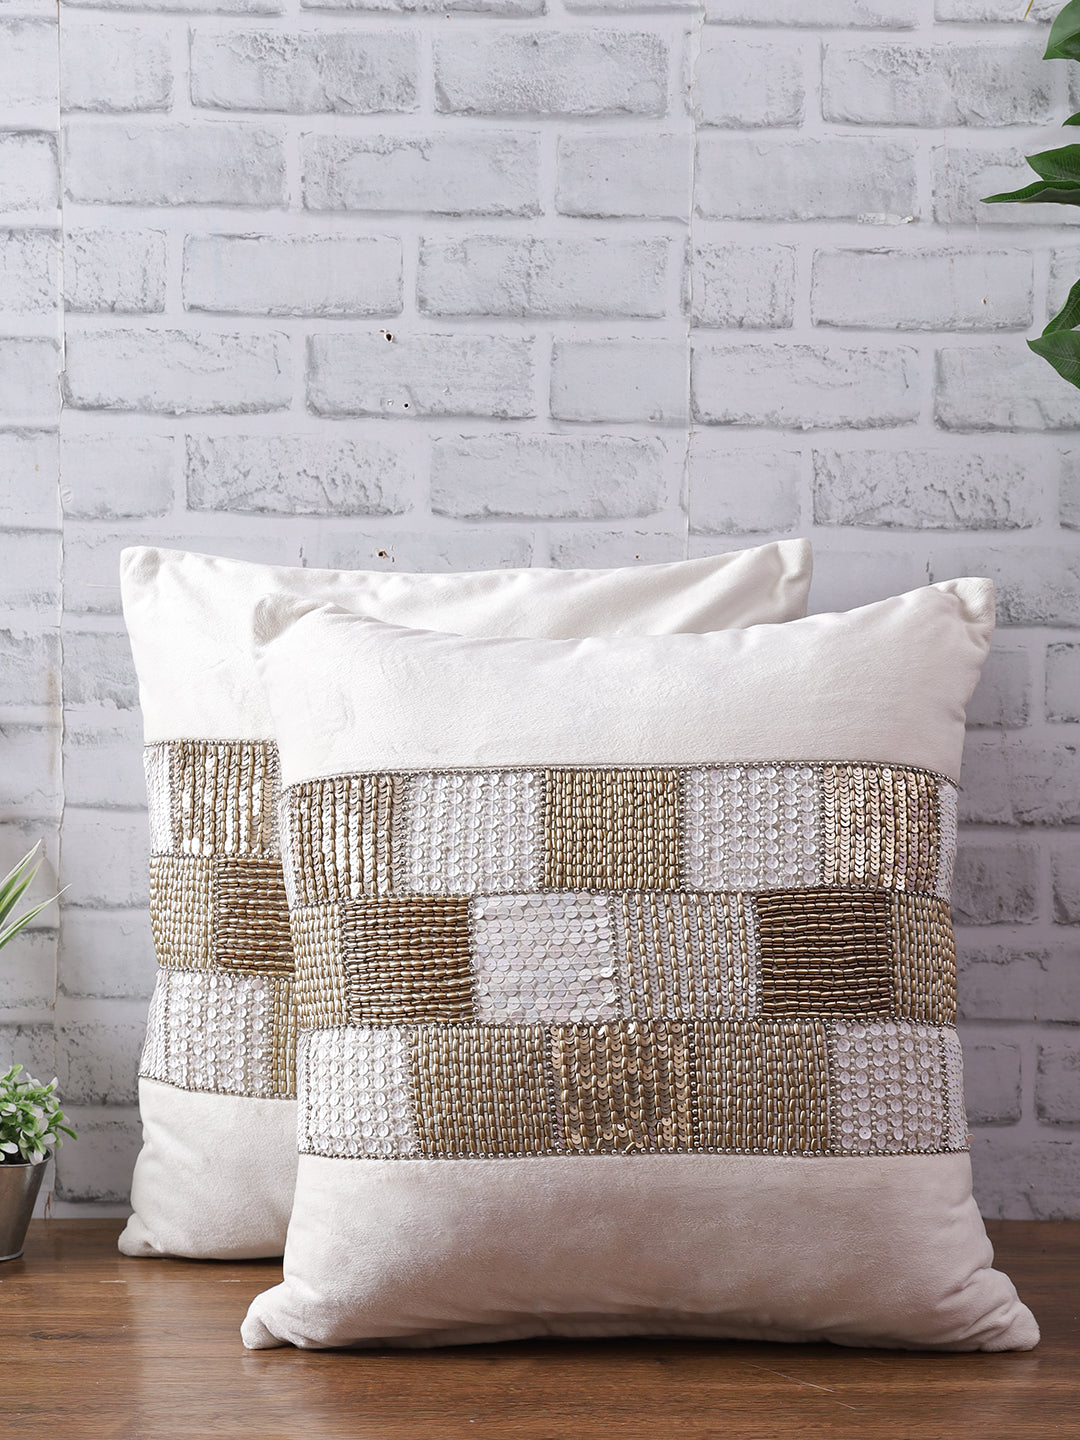 Set Of 2 White & Gold-Toned Embellished Velvet Square Cushion Covers